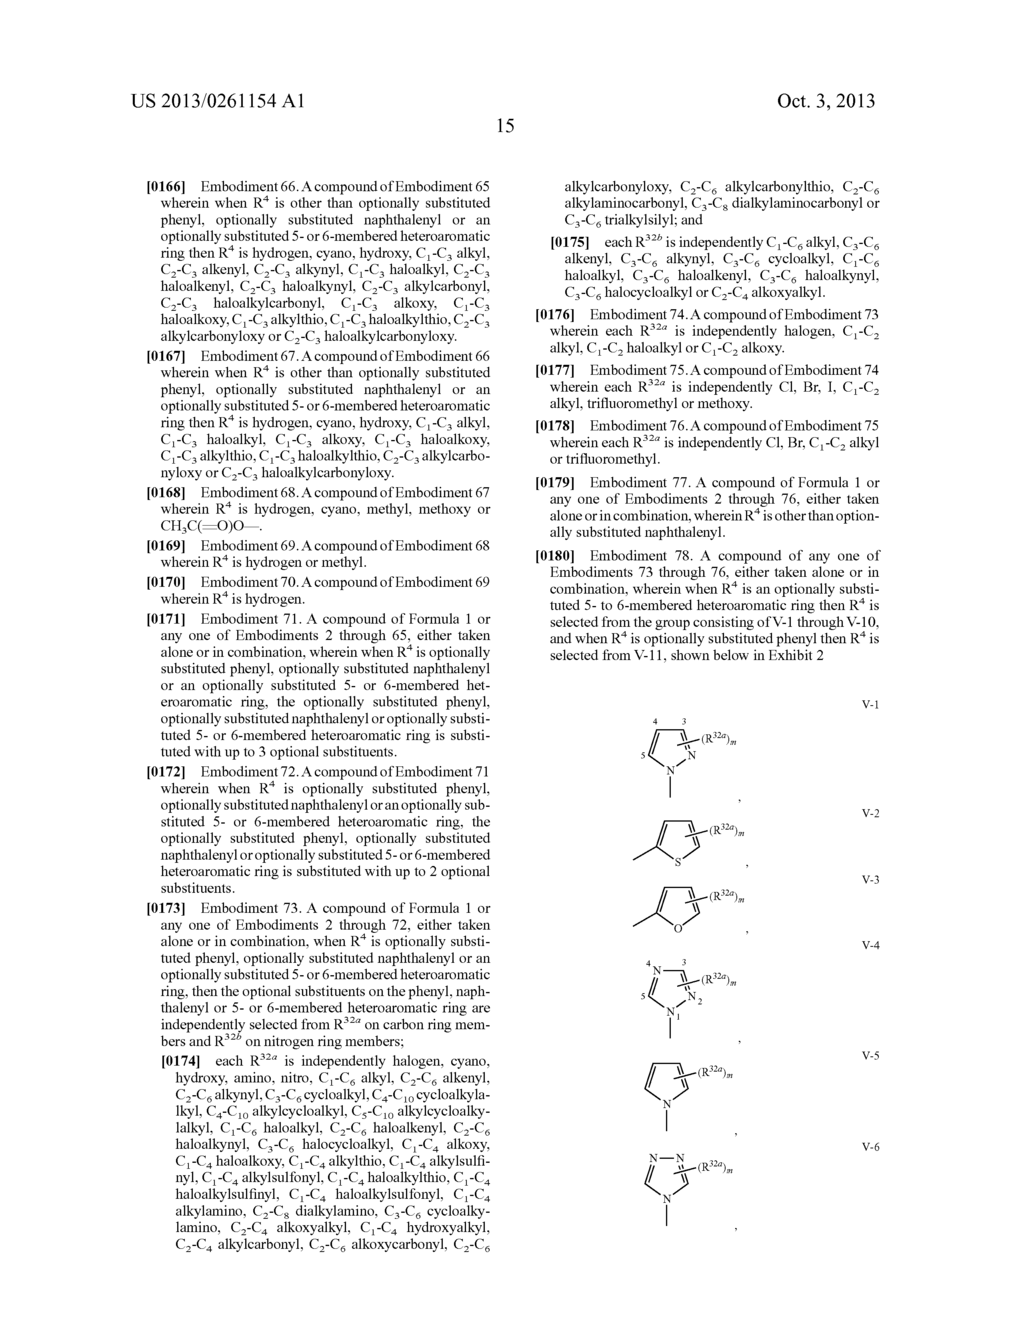 FUNGICIDAL AZOCYCLIC AMIDES - diagram, schematic, and image 16